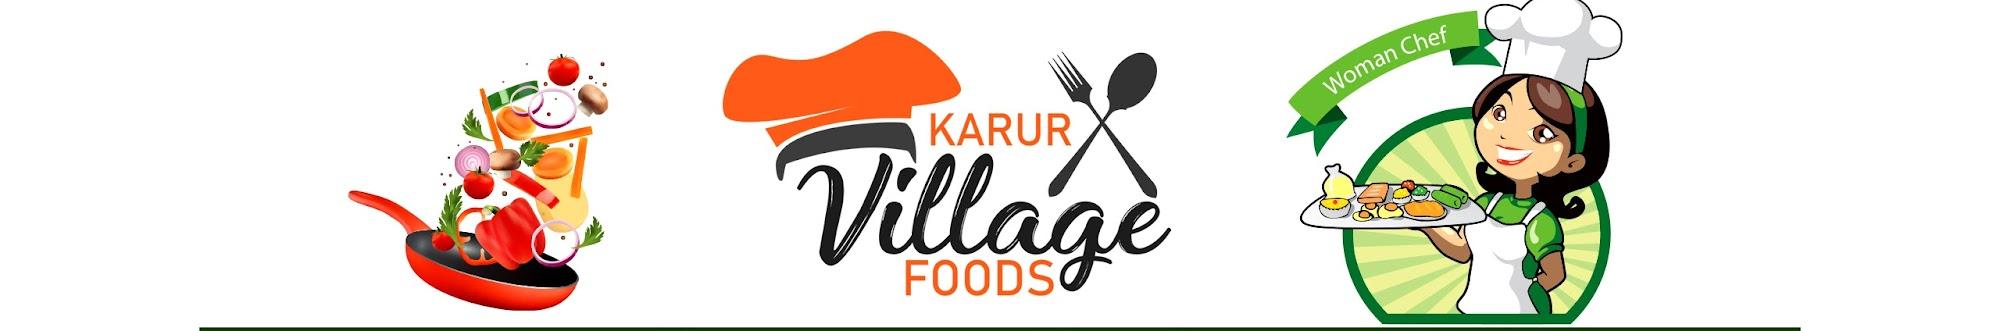 Karur Village Food's